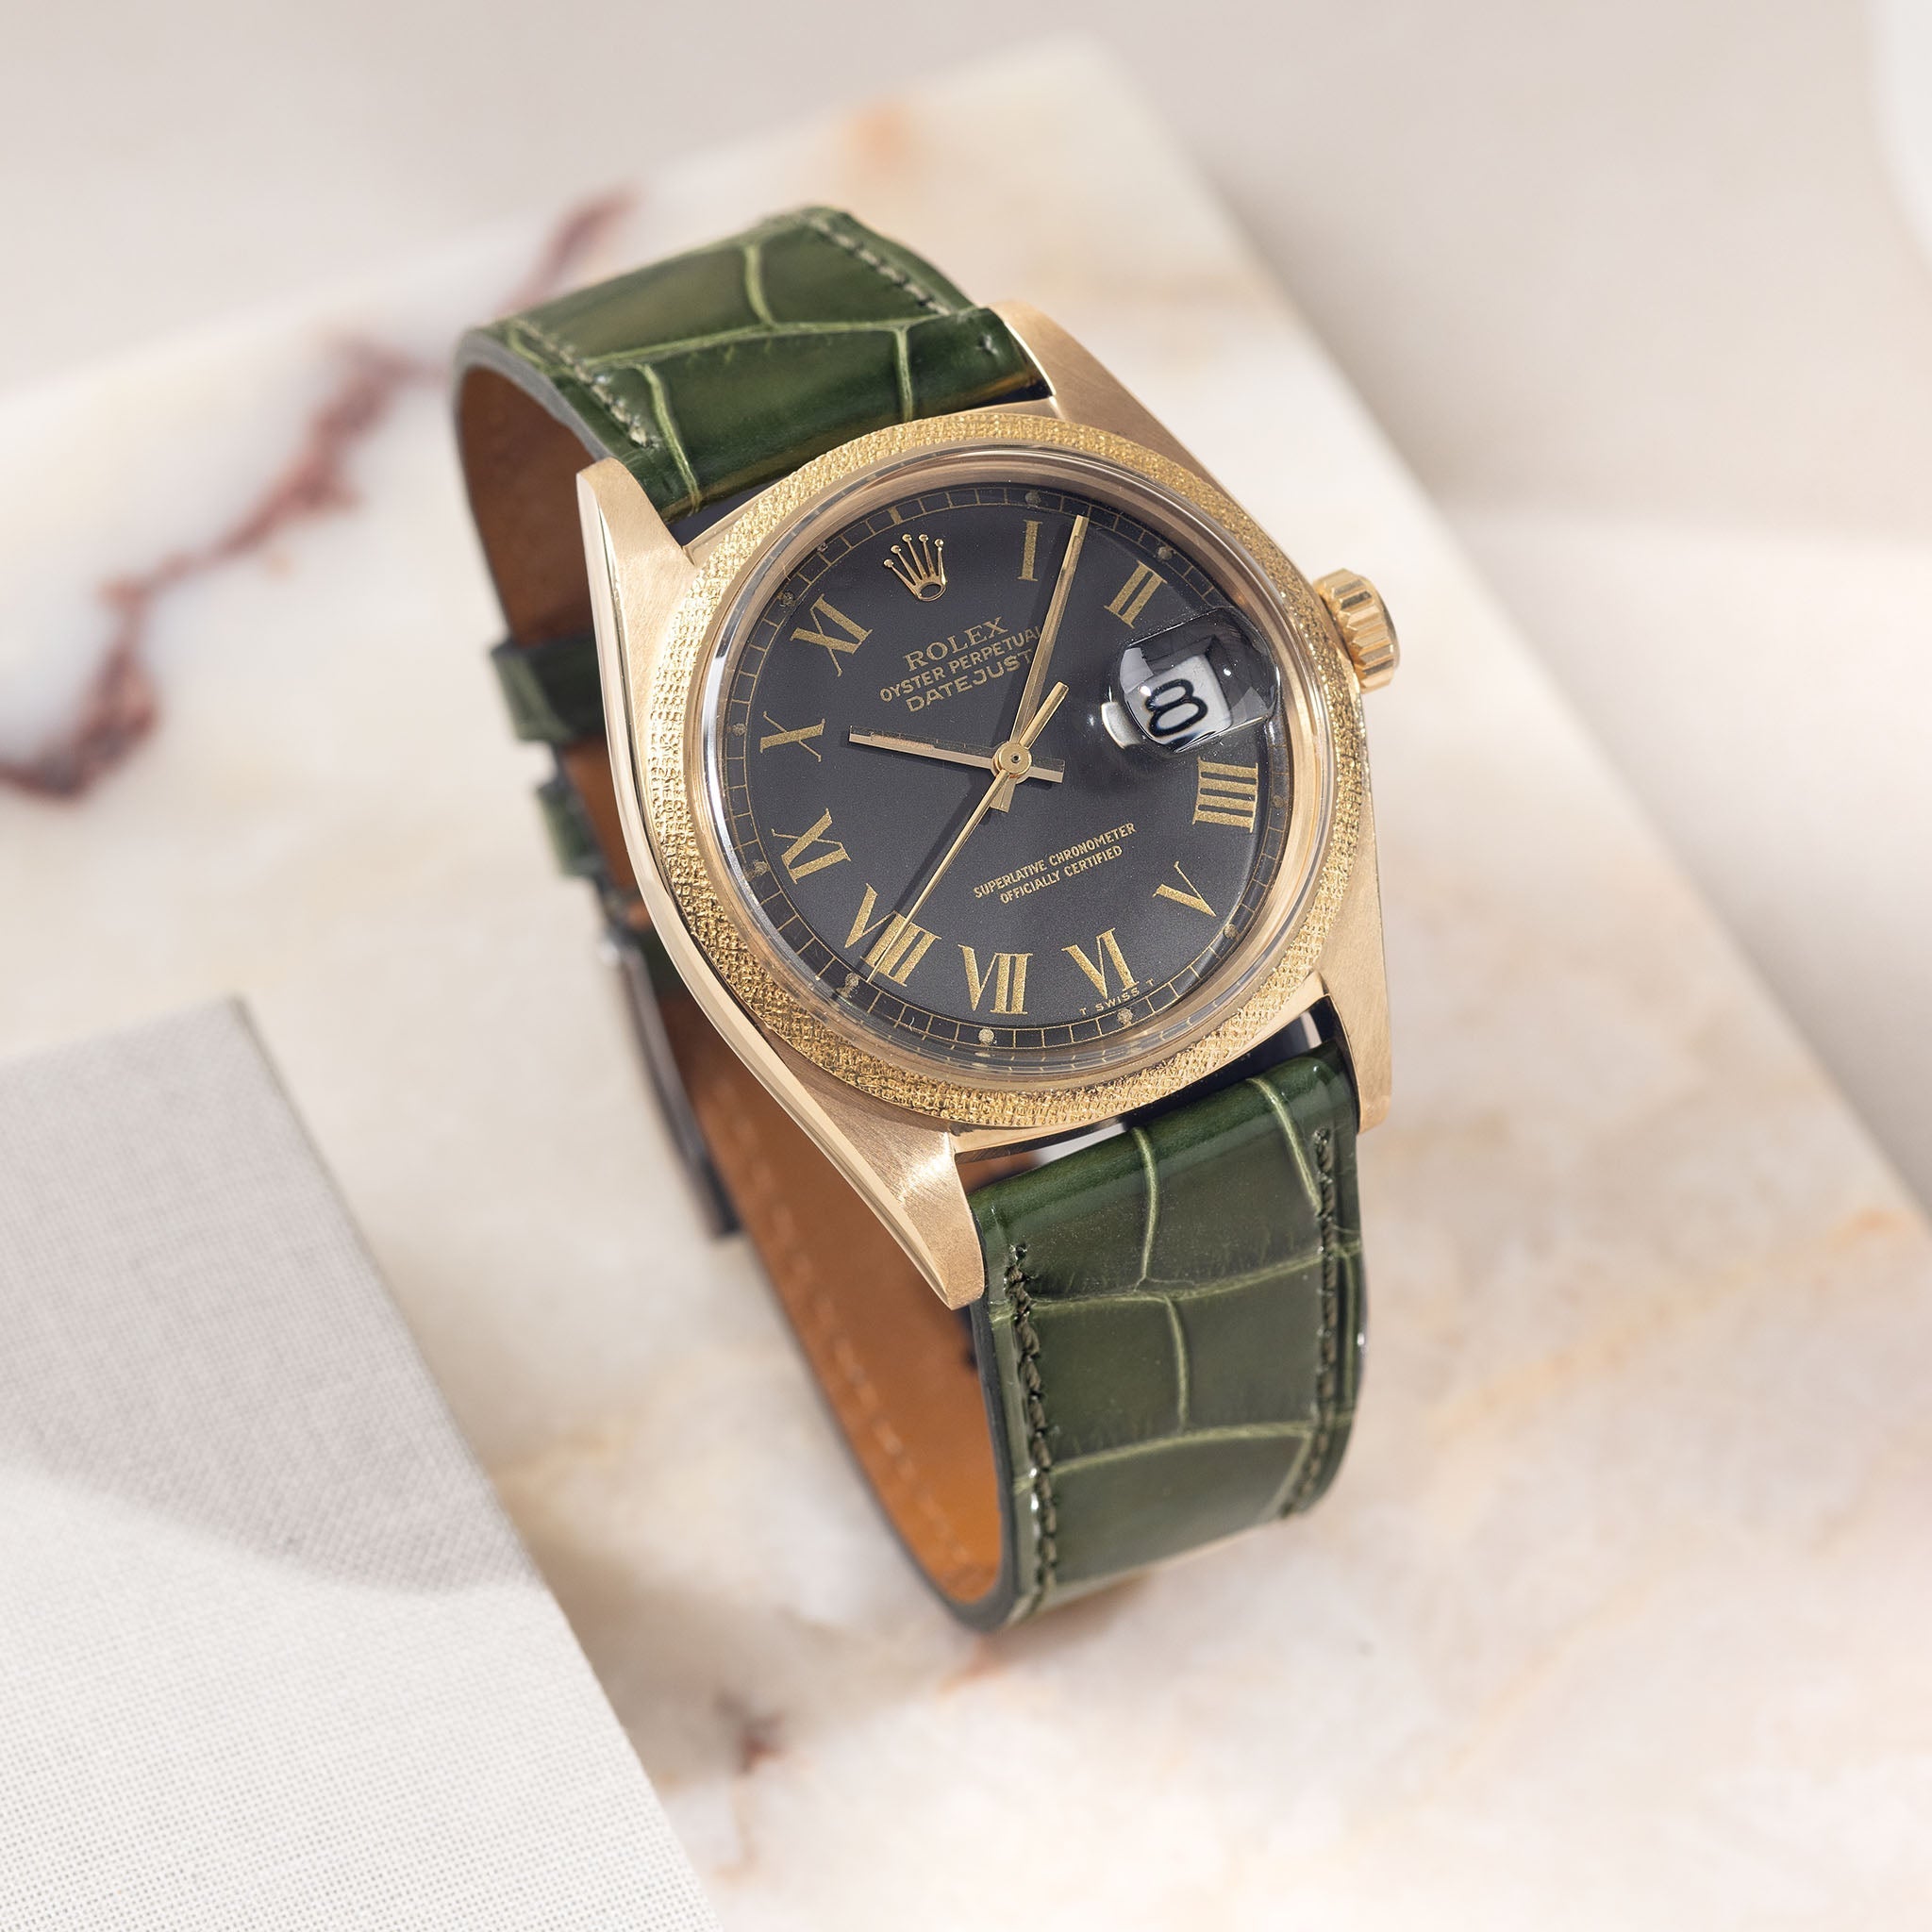 Premium Alligator Brilliant Olive Leather Watch Strap